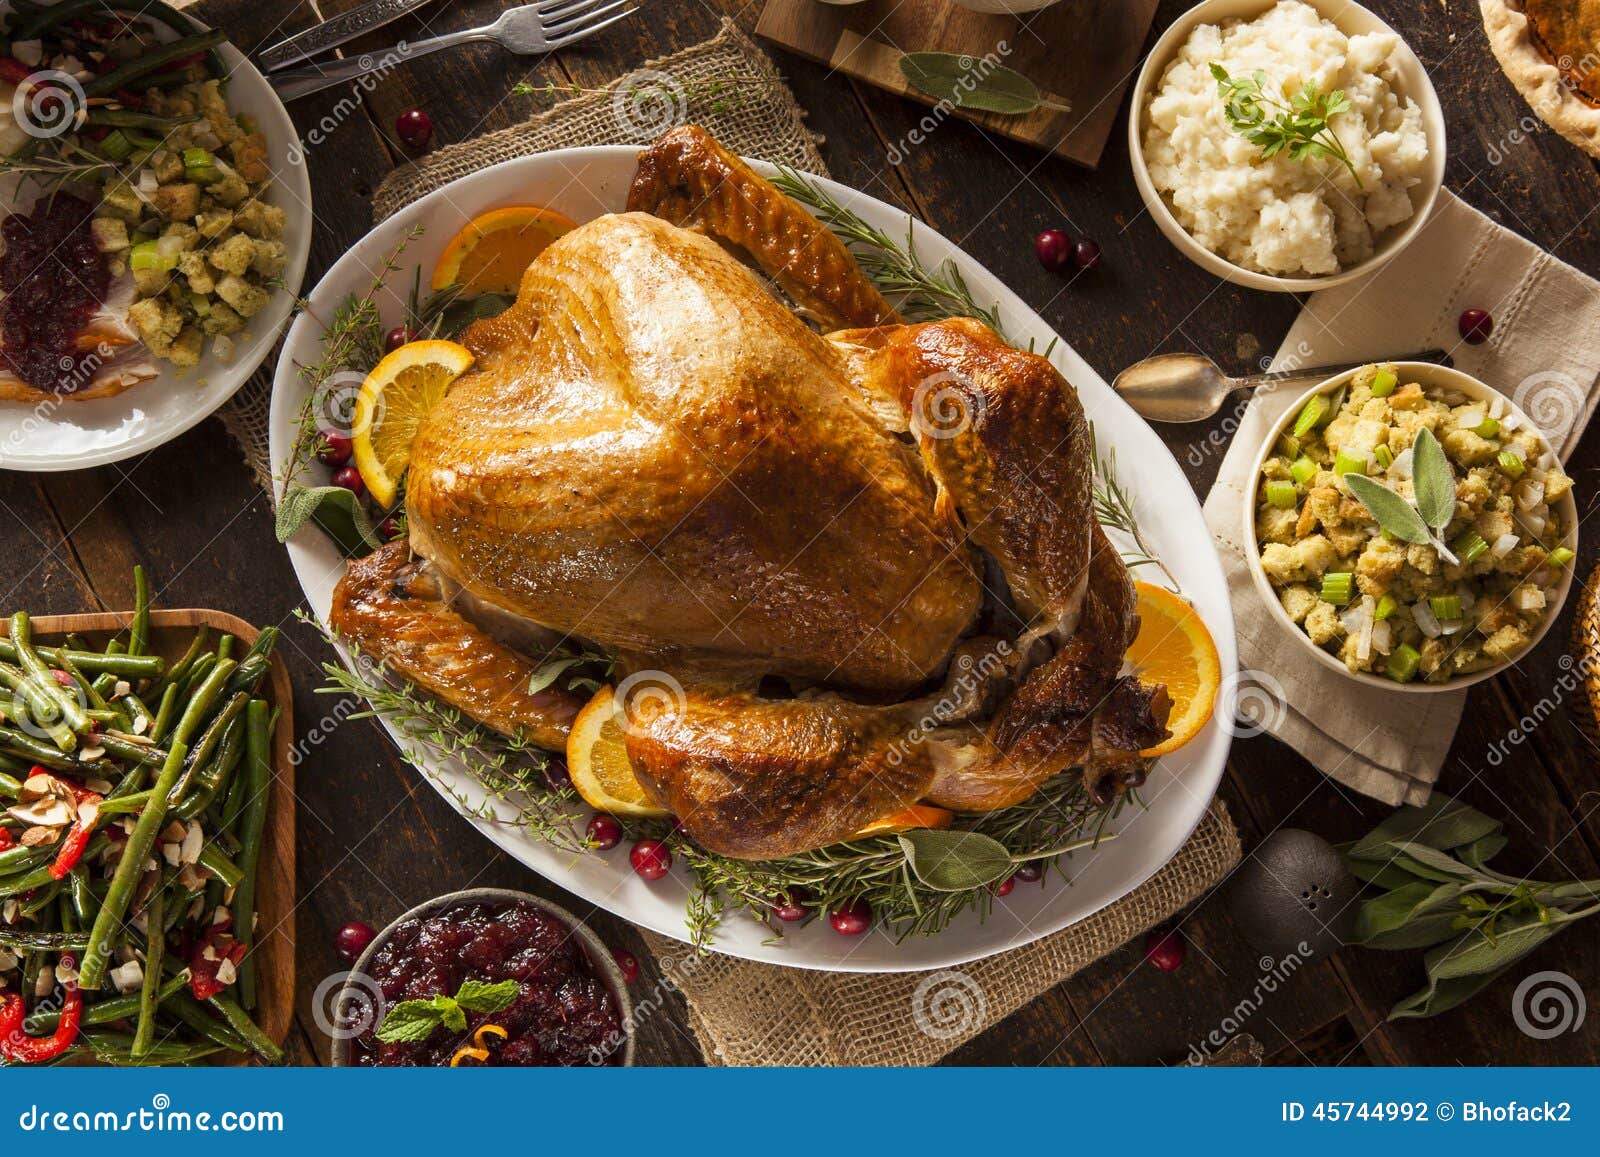 Whole Homemade Thanksgiving Turkey Stock Photo - Image of november ...